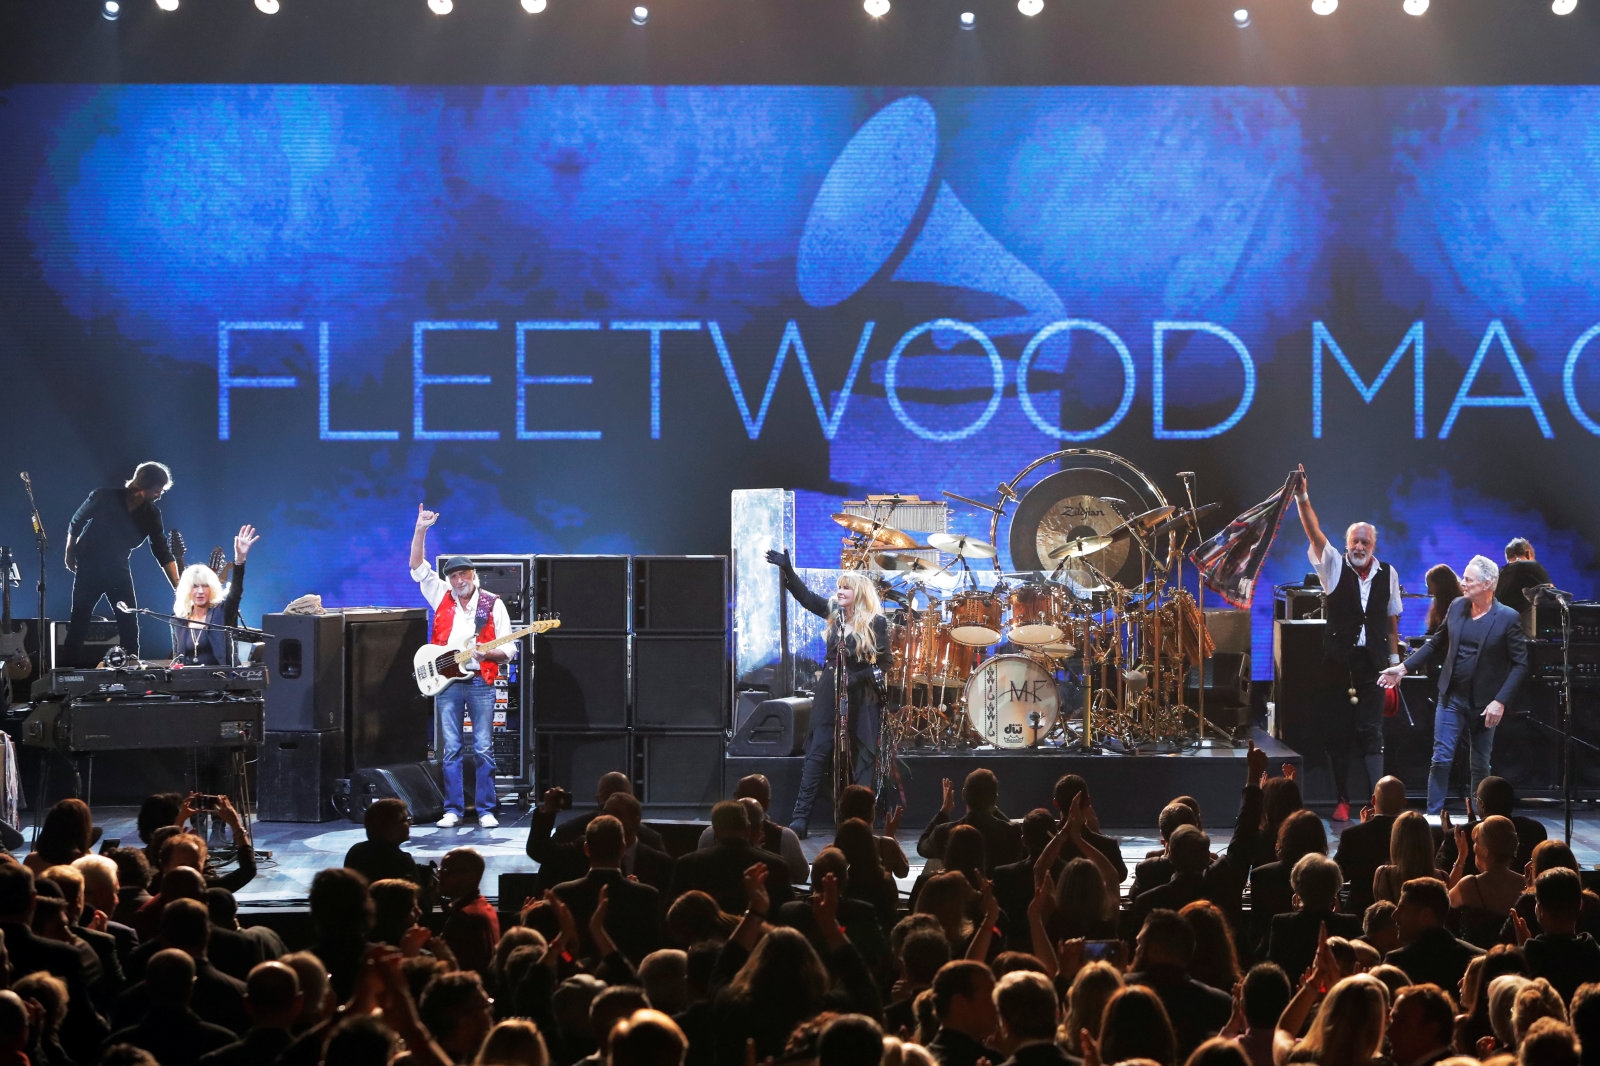  A tweet sent Fleetwood Mac back to the Billboard charts | DeviceDaily.com